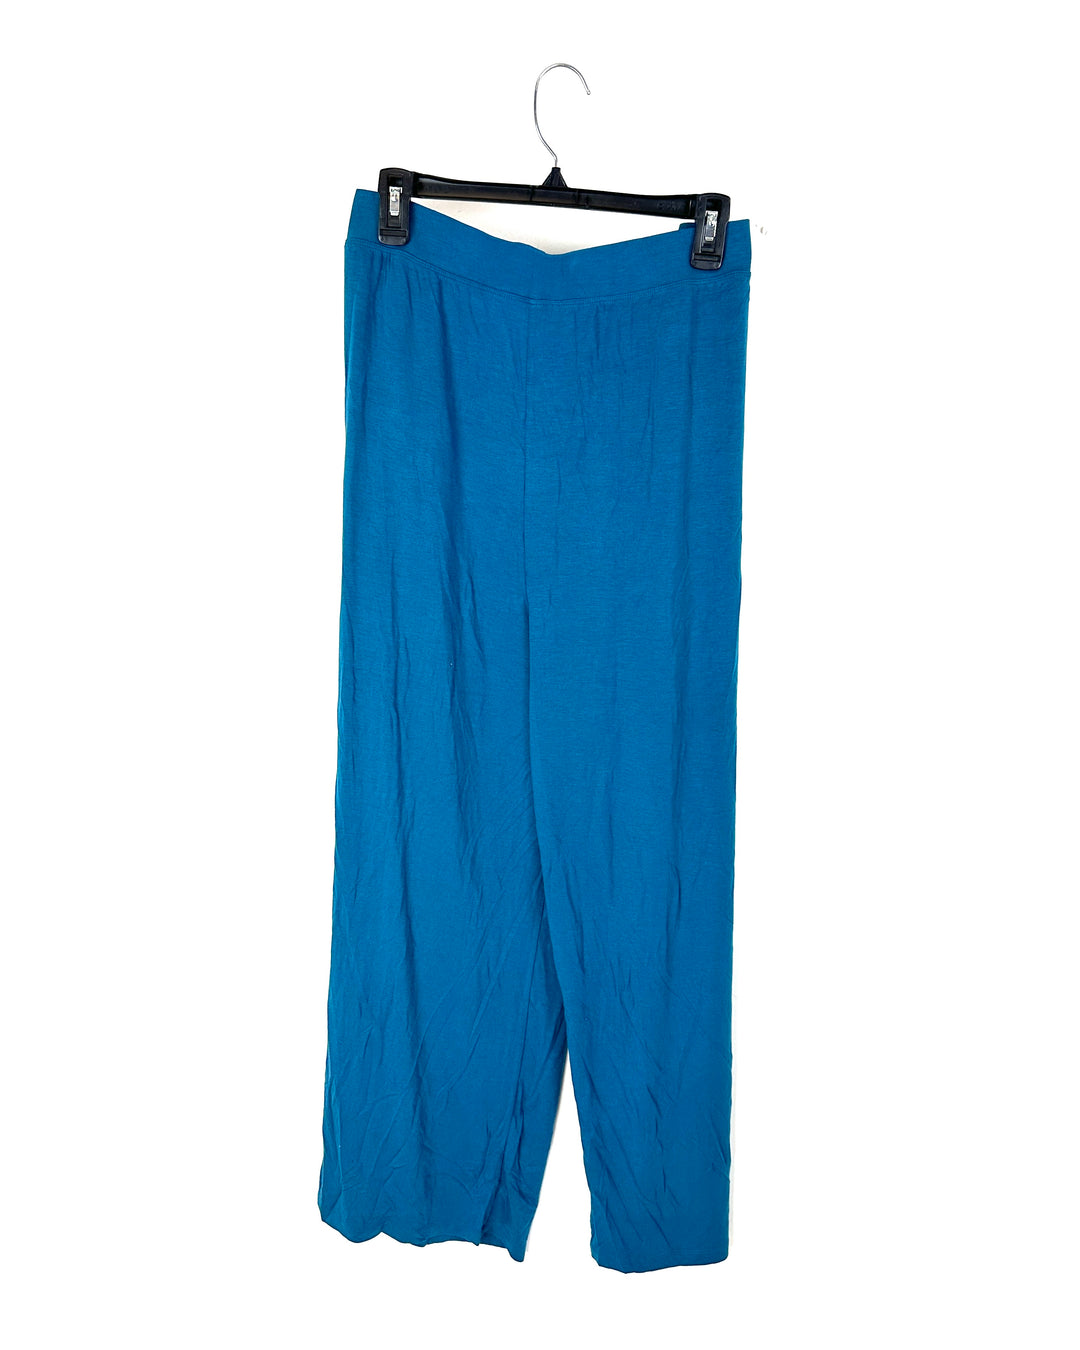 Ocean Blue Straight Leg Lounge Pants - Size 1X